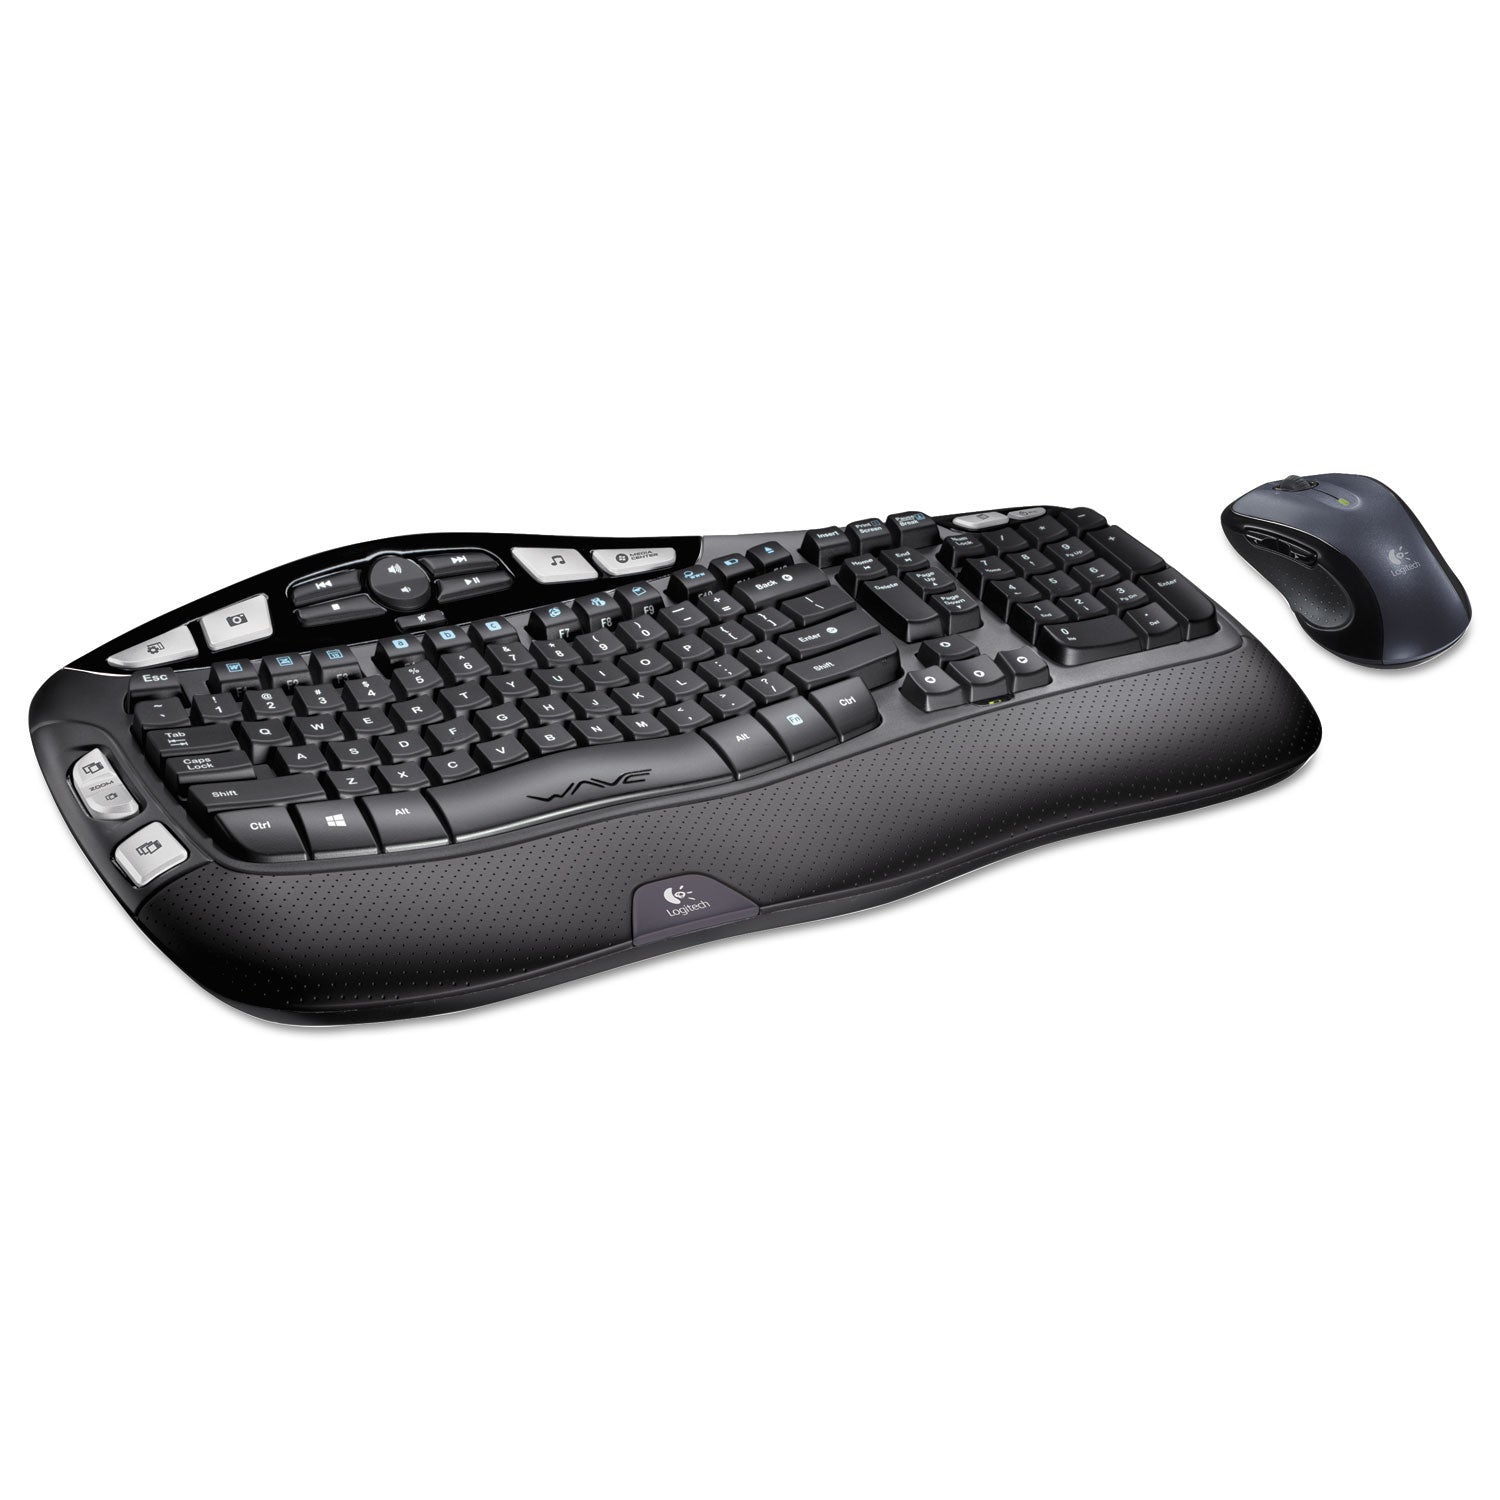 MK550 Wireless Wave Keyboard + Mouse Combo, 2.4 GHz Frequency/30 ft Wireless Range, Black - 